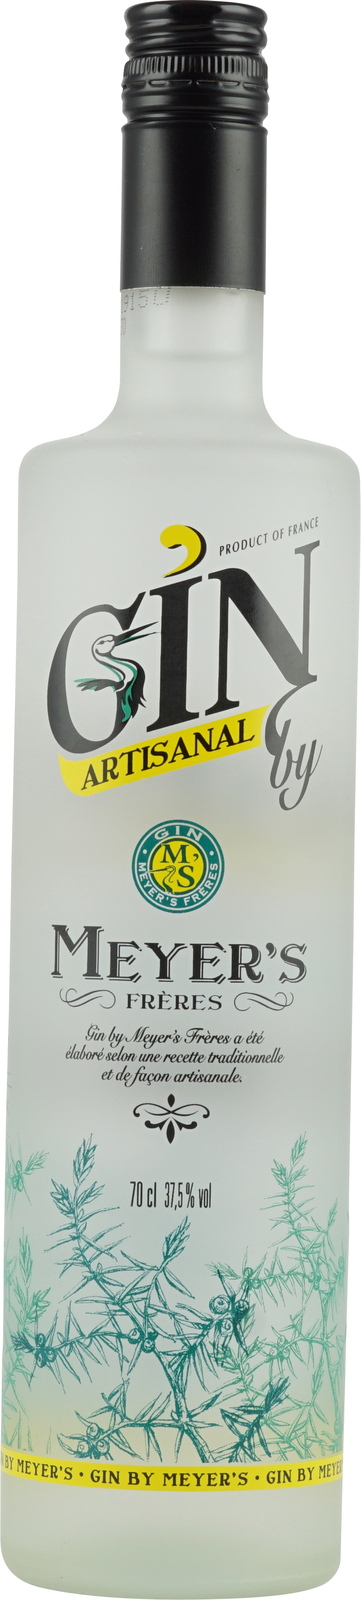 Gin Artisanal Meyers Freres bei